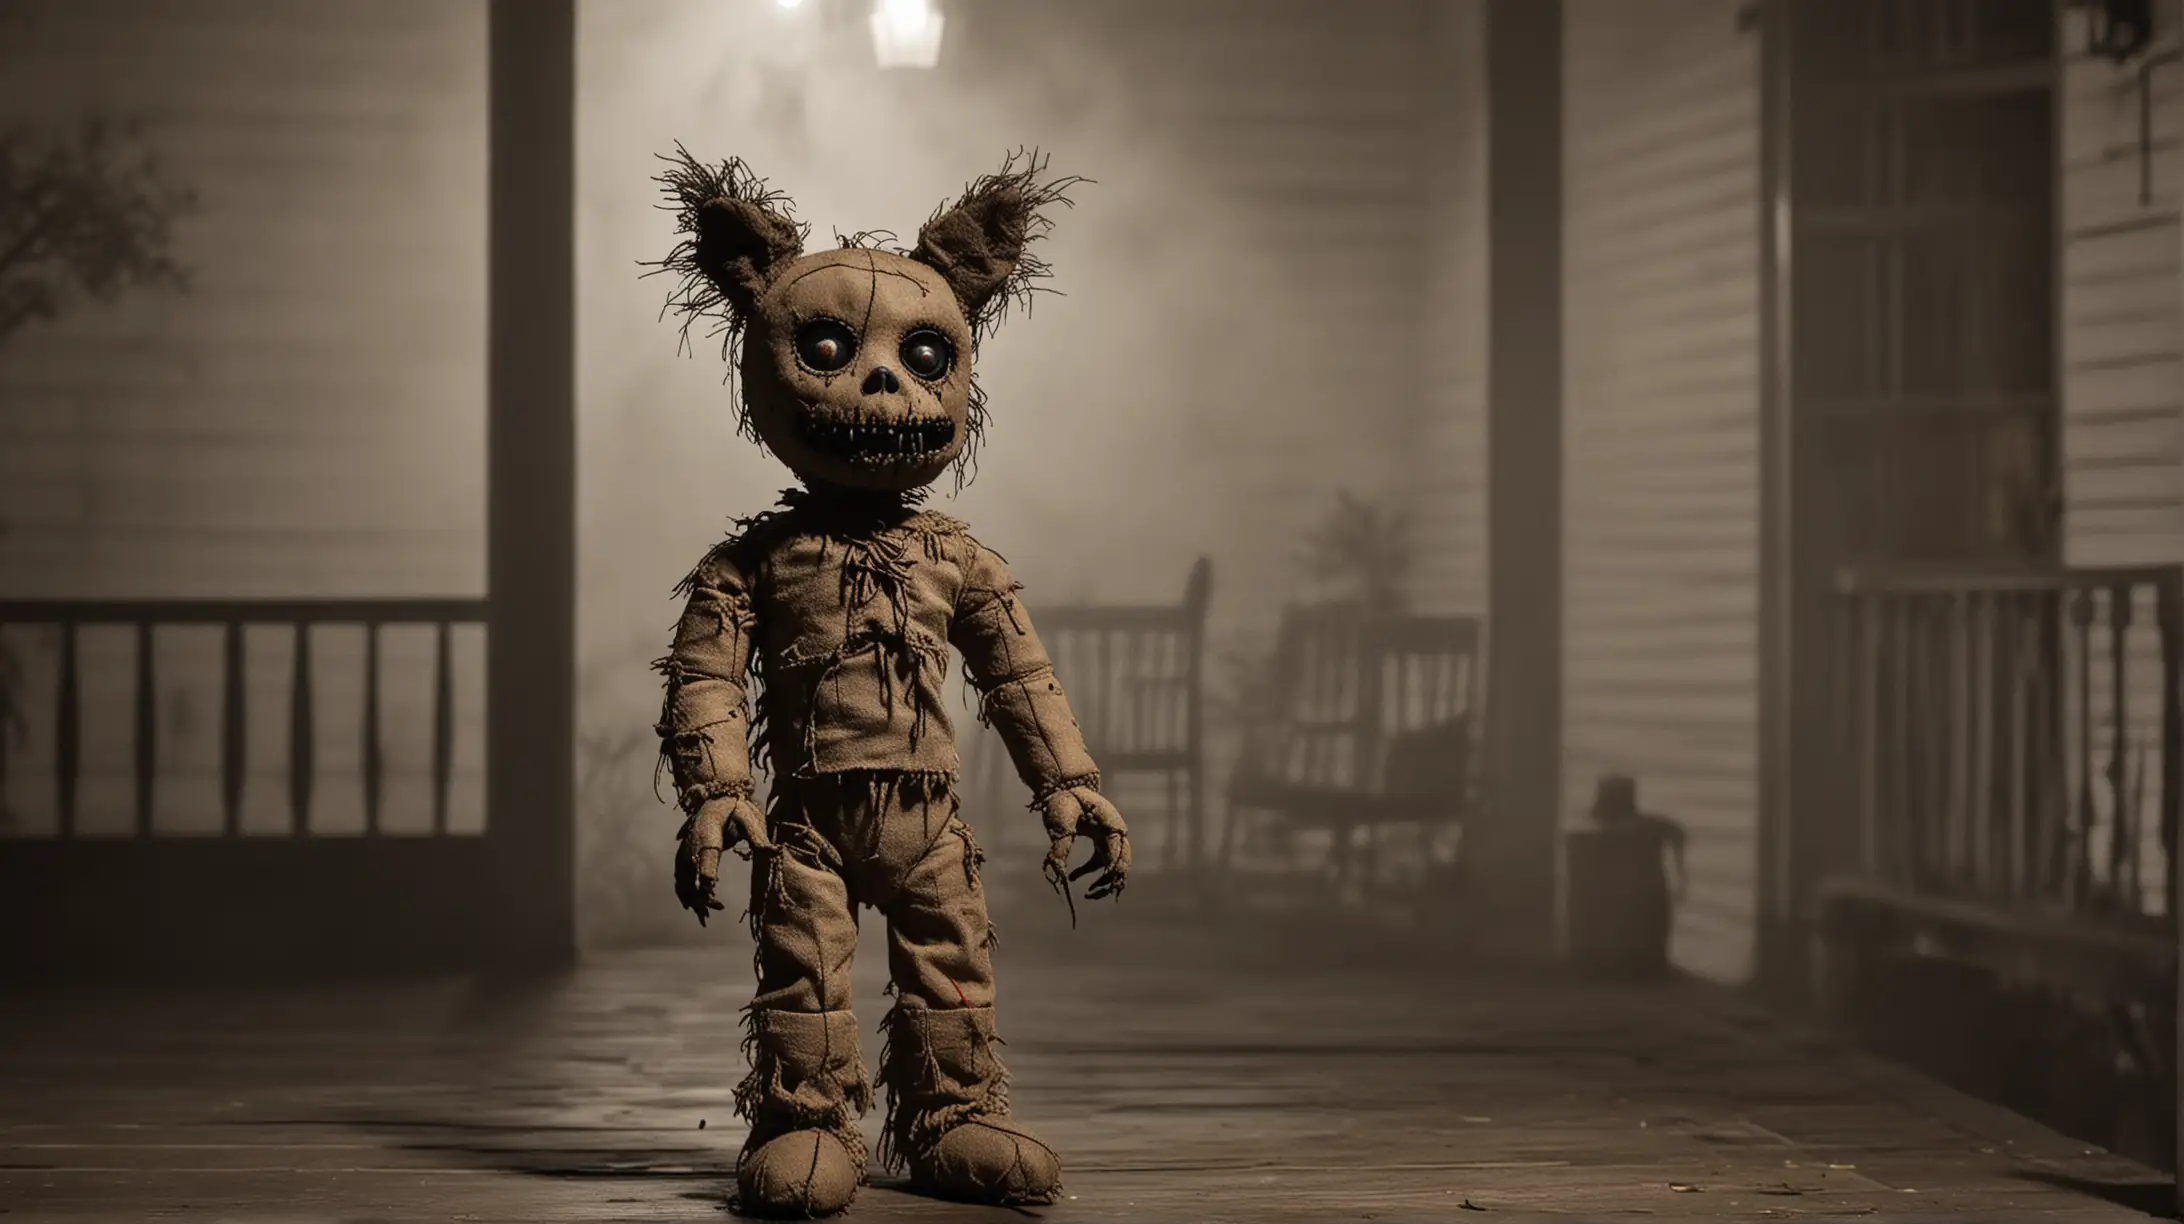 Voodoo Werewolf Doll on Louisiana Plantation Mansion Back Porch at Night